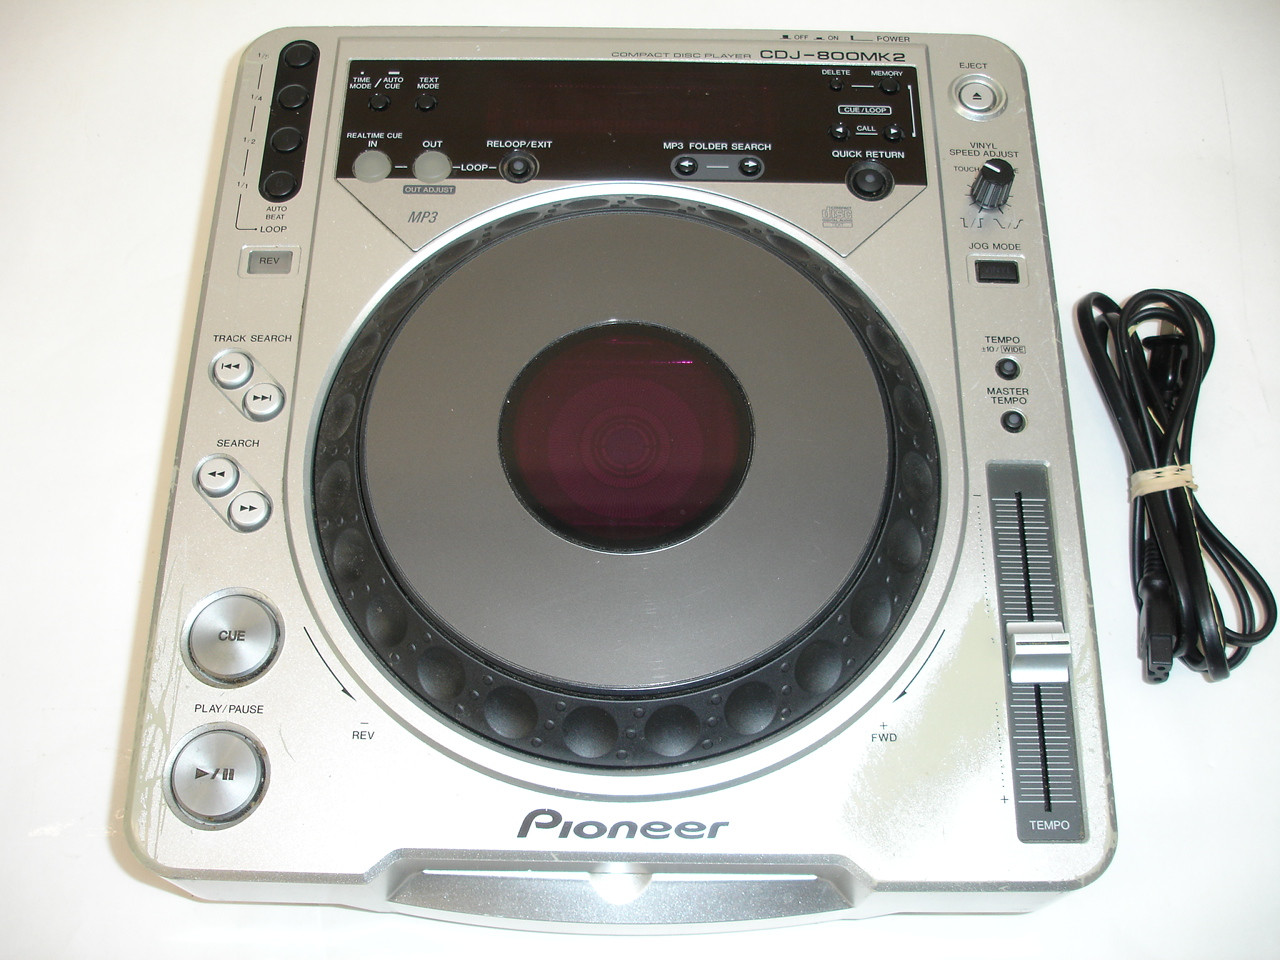 Pioneer CDJ-800MK2 Professional Digital CD / MP3 Turntable